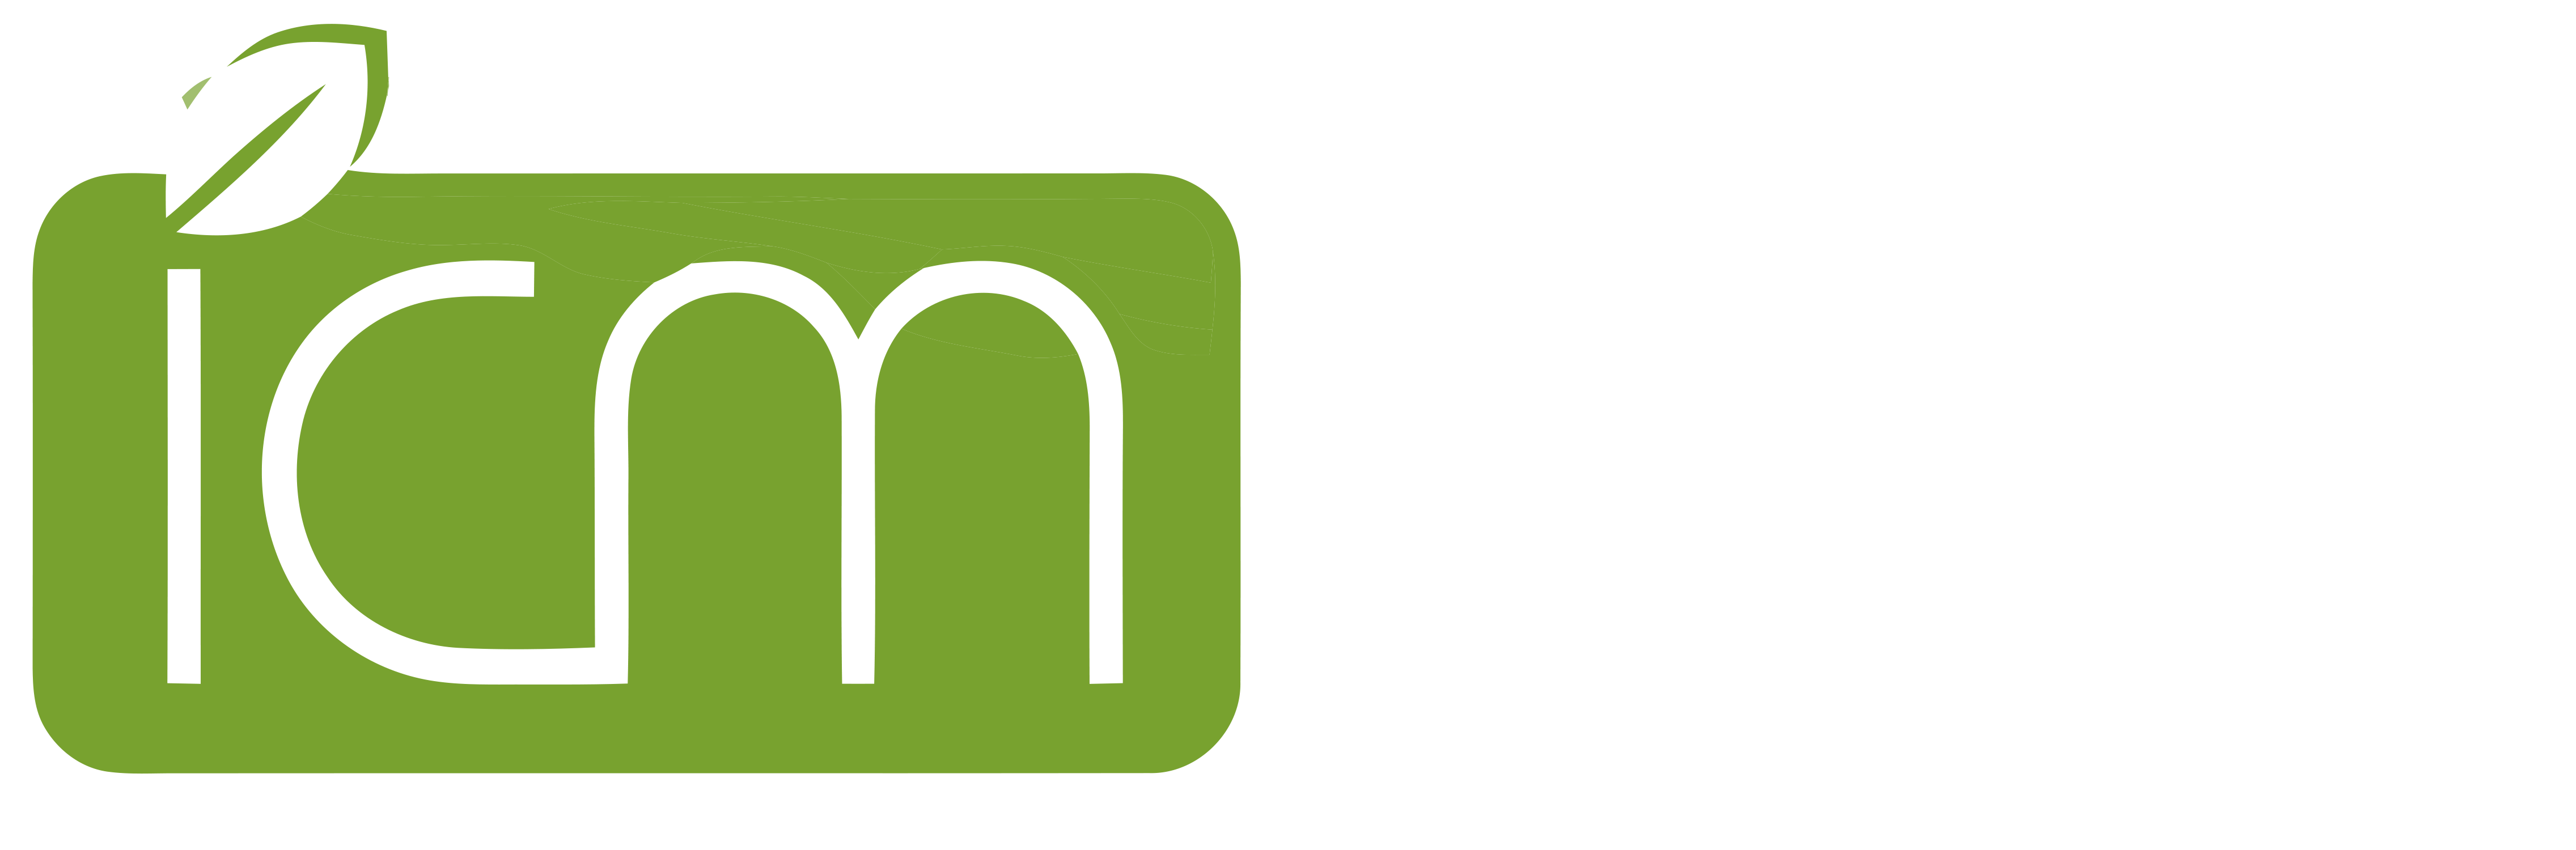 ICM Logo Only white